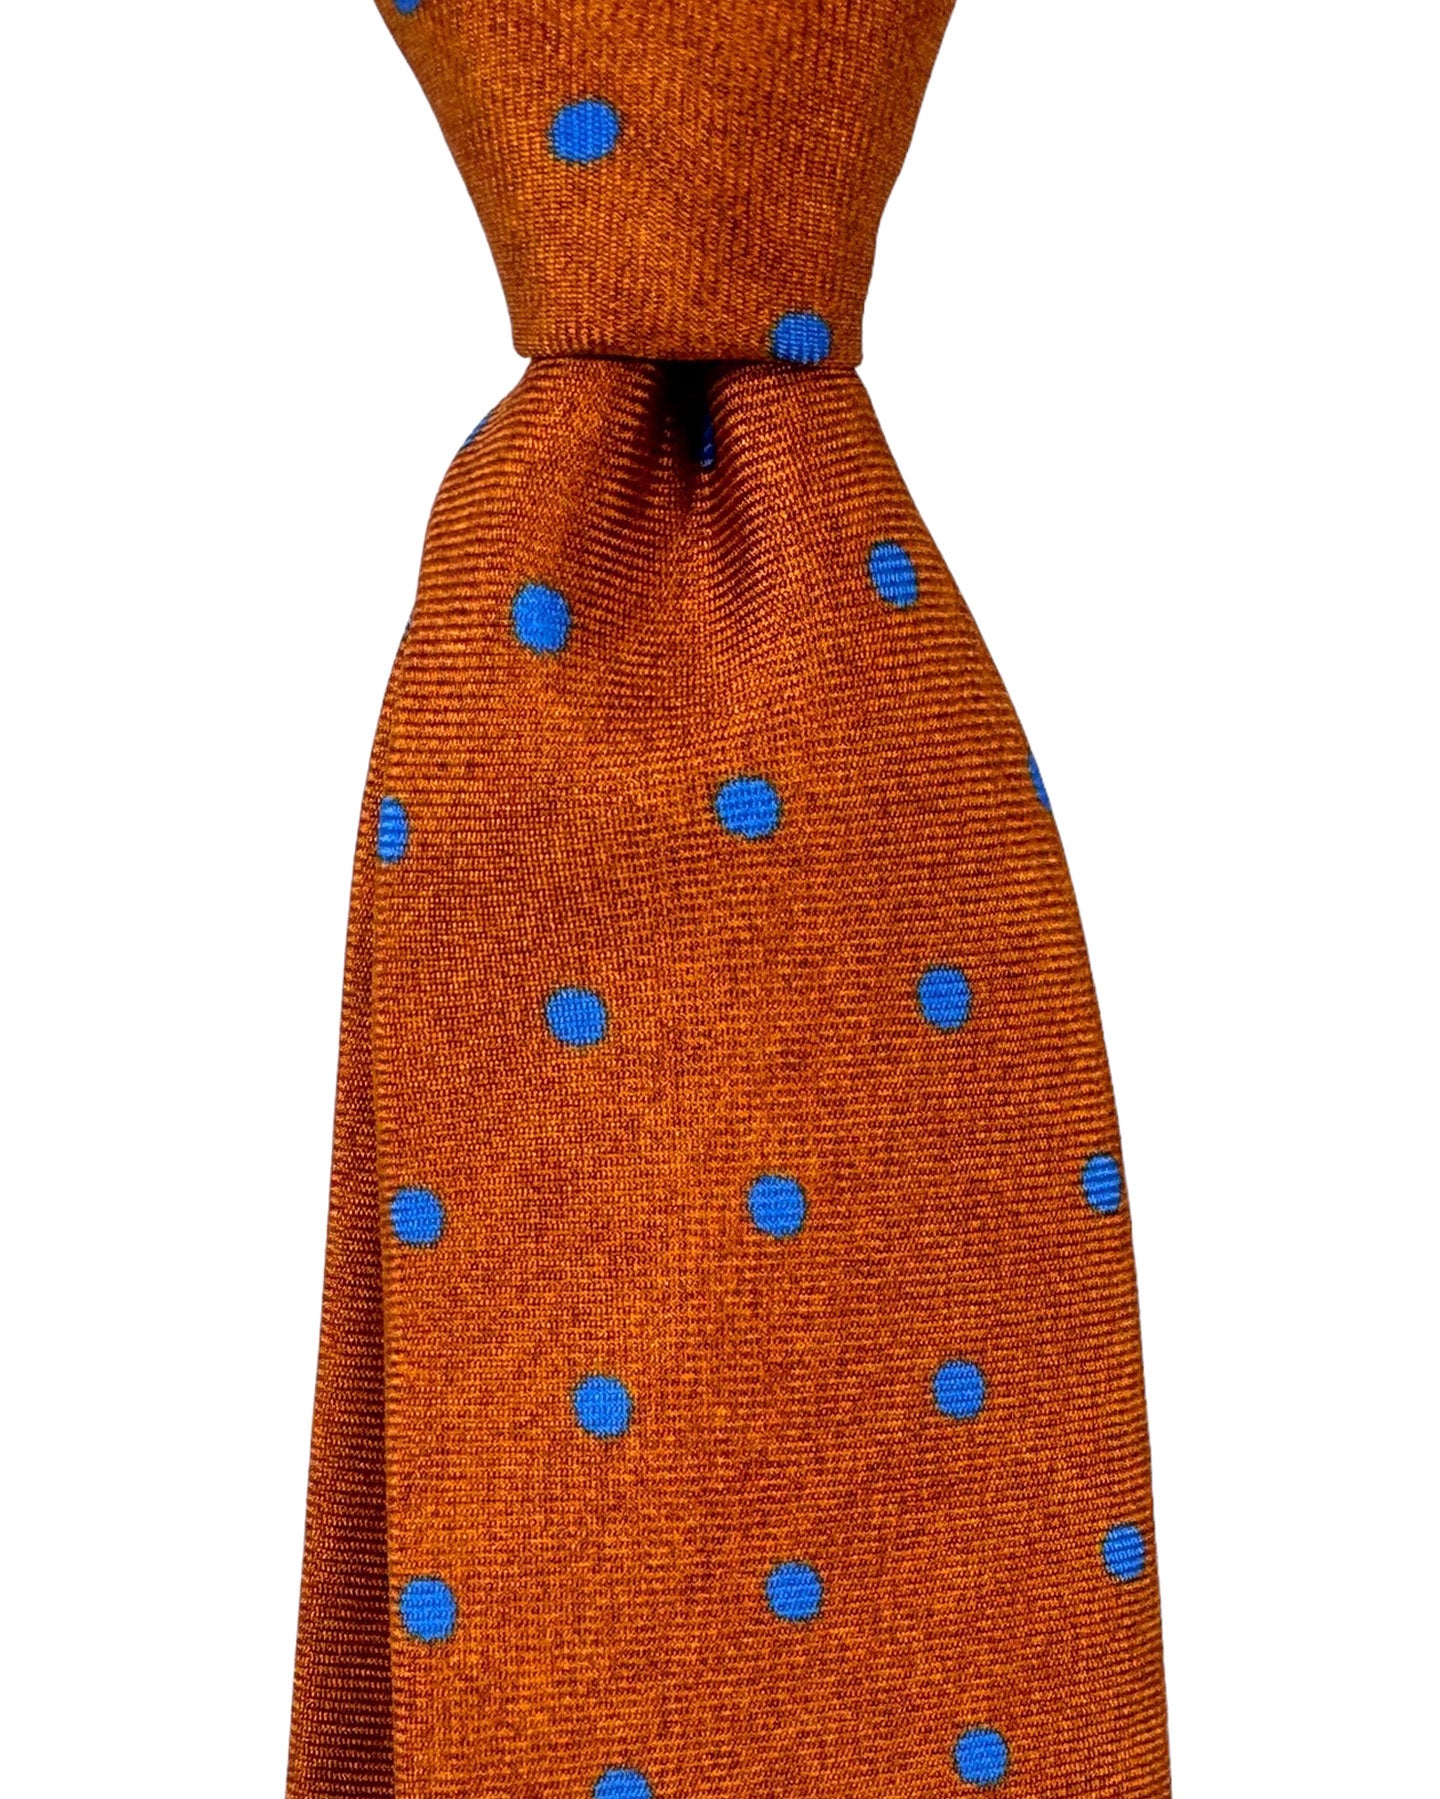 Kiton Tie Rust Brown Royal Blue Mini Dots - Sevenfold Necktie